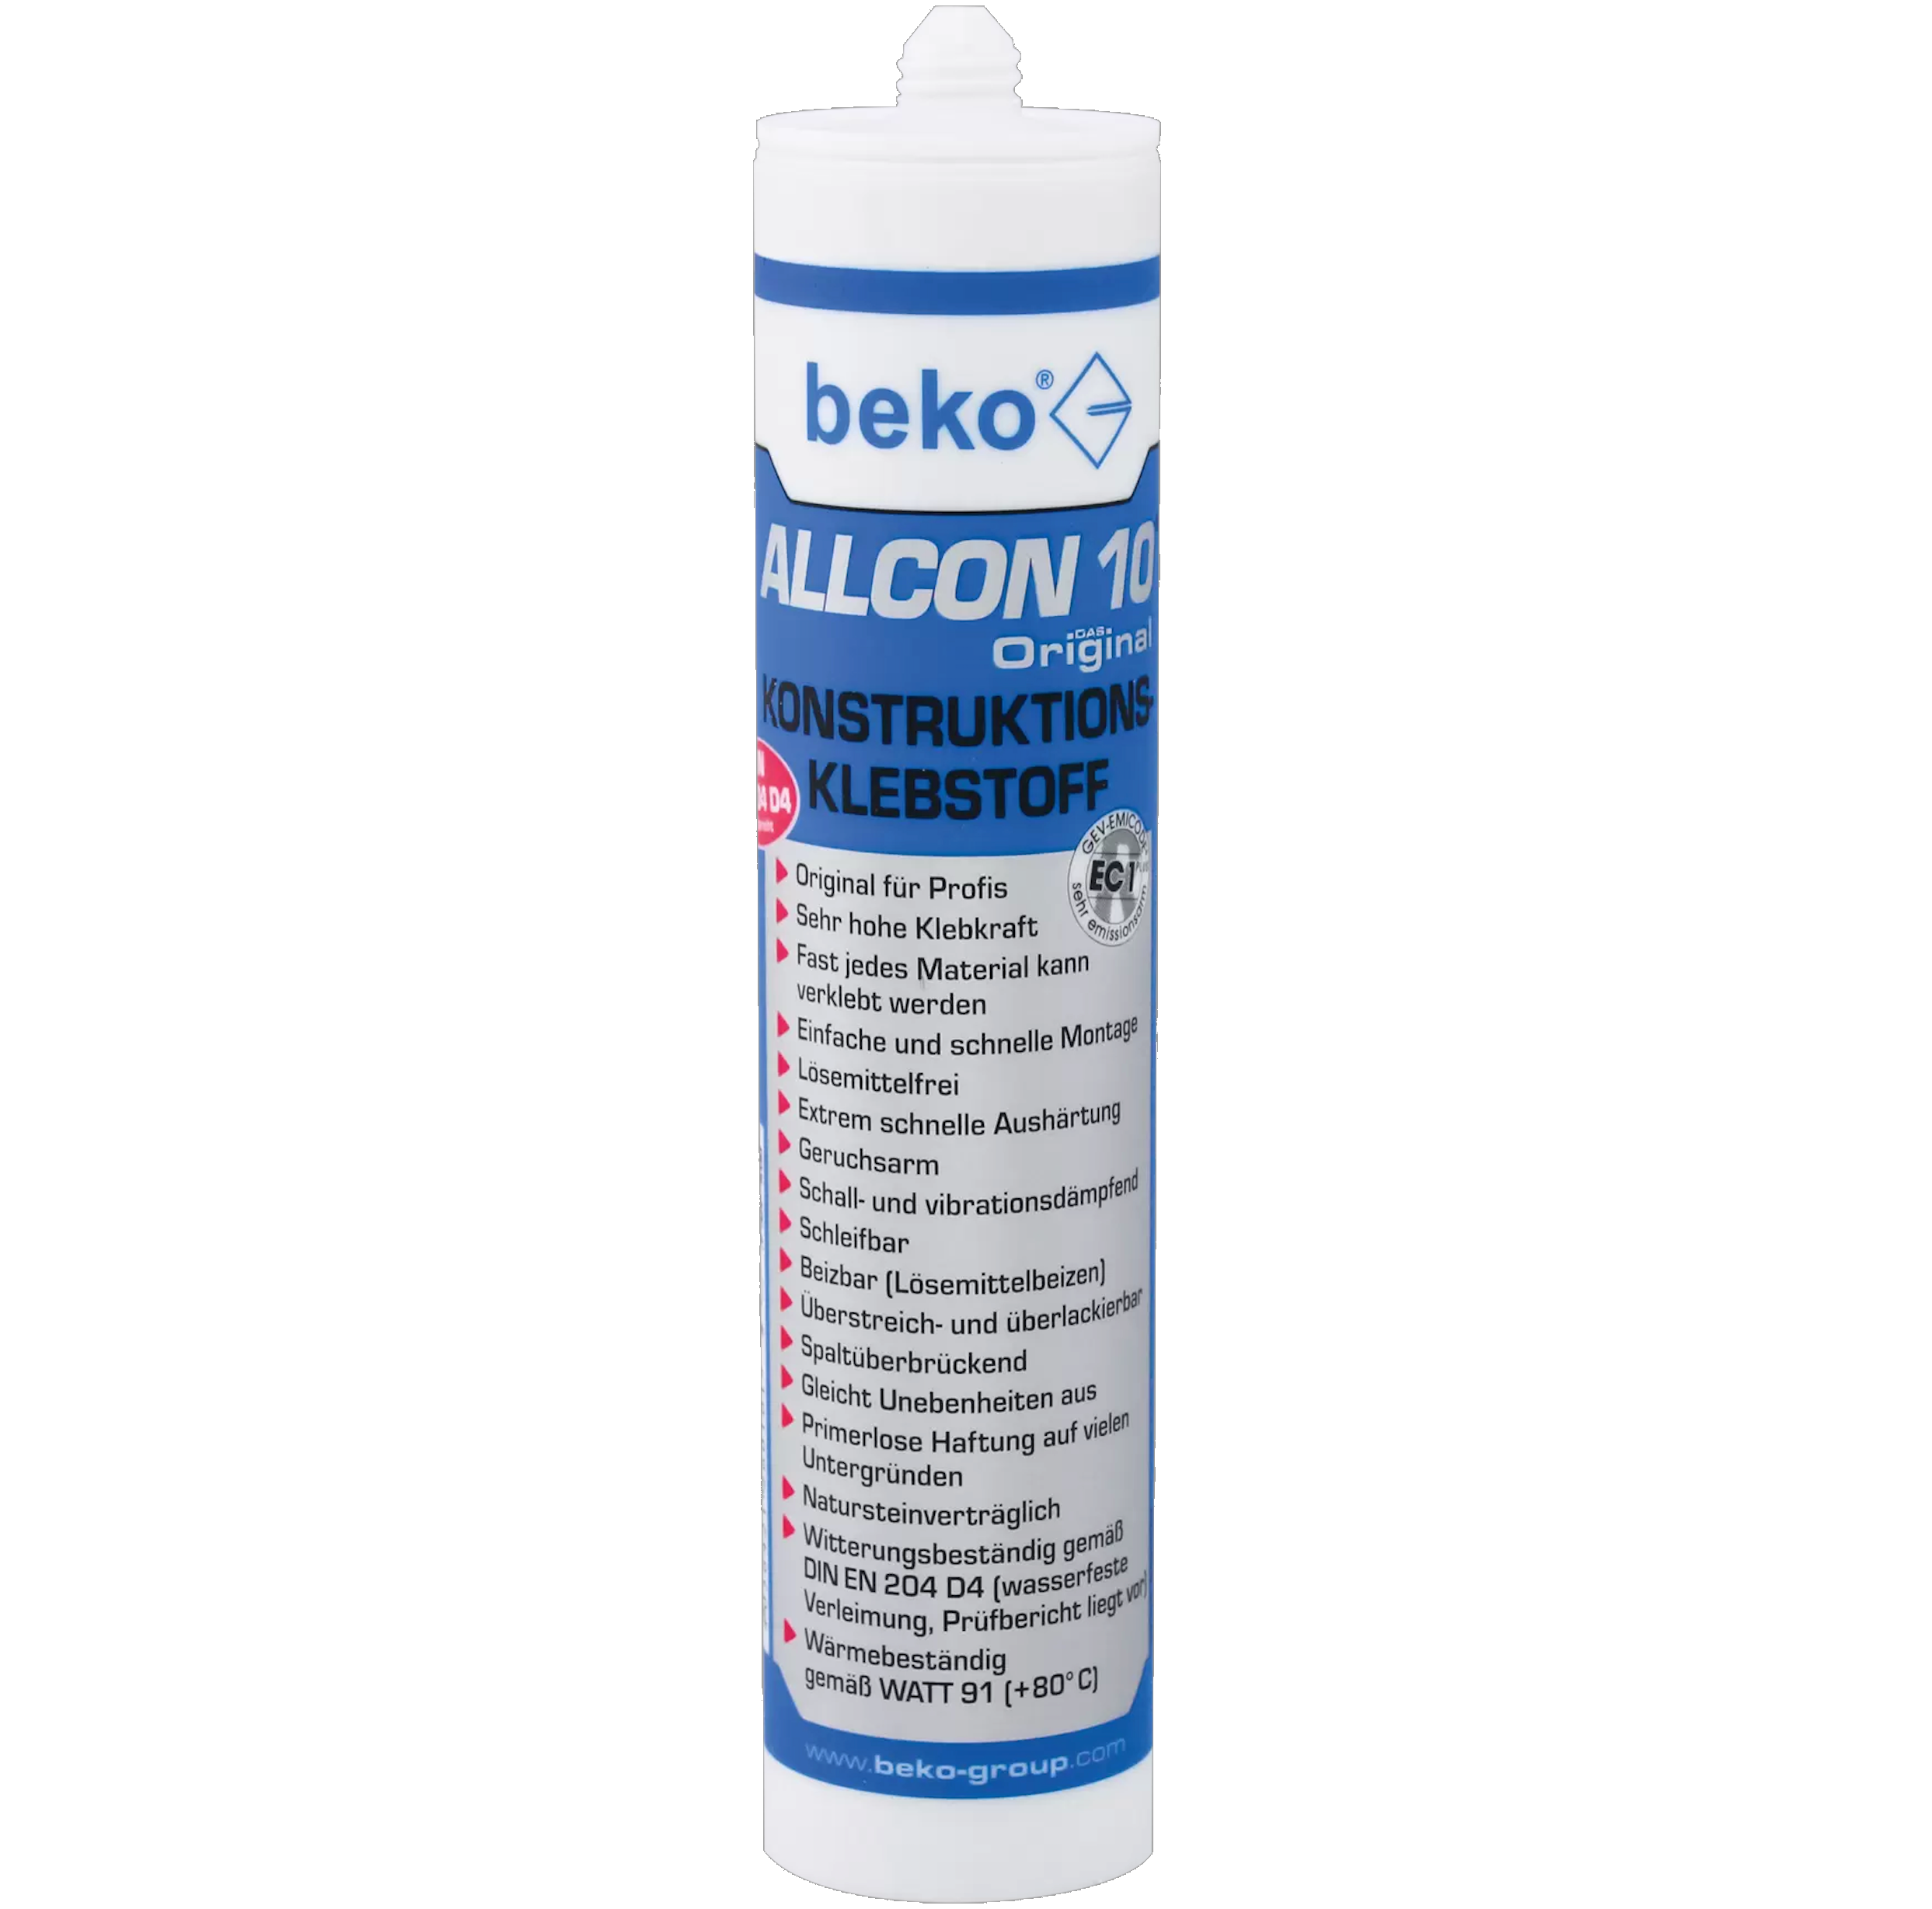 beko® Allcon 10 Konstruktionsklebstoff